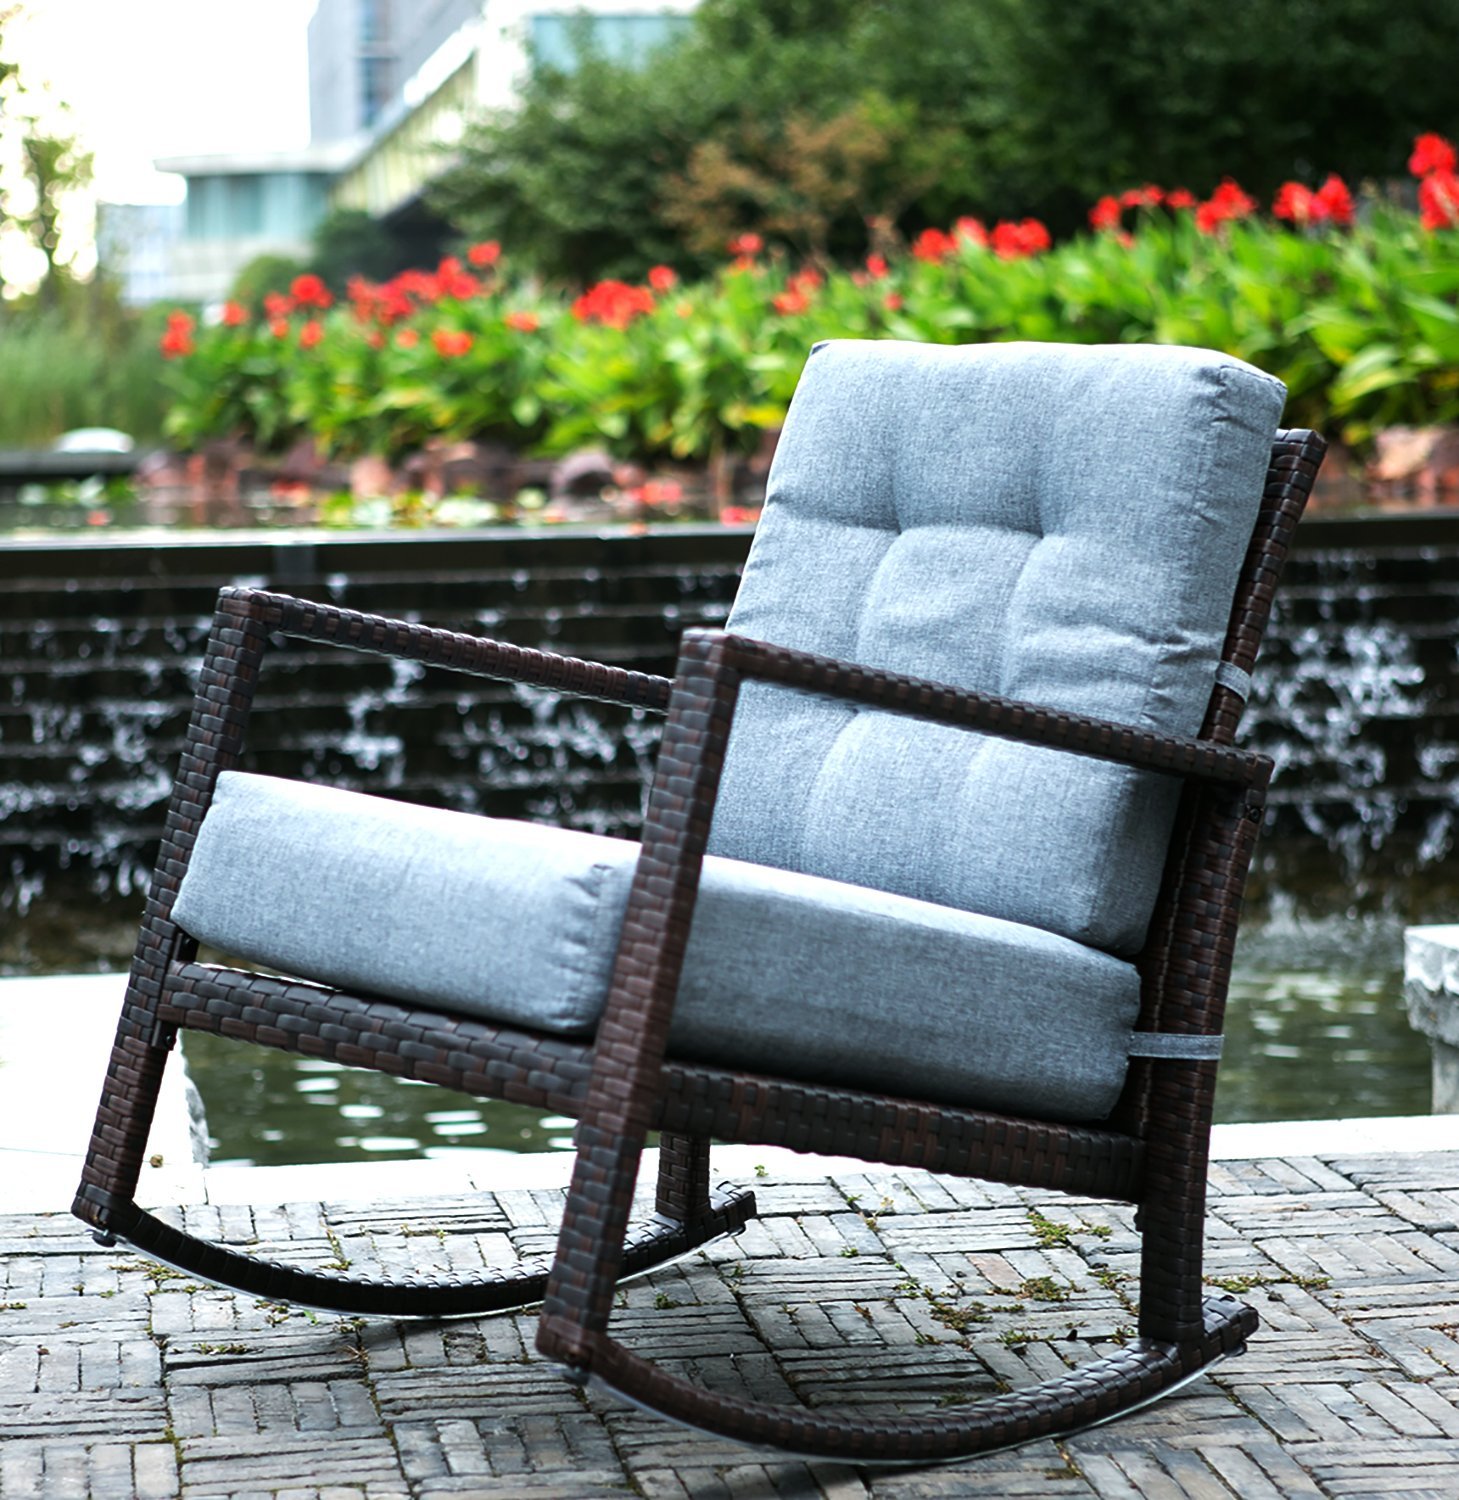 Merax Cushioned Rattan Rocker Chair Patio Glider Lounge Wicker Chair with Cushion(Grey Cushion) - image 1 of 3